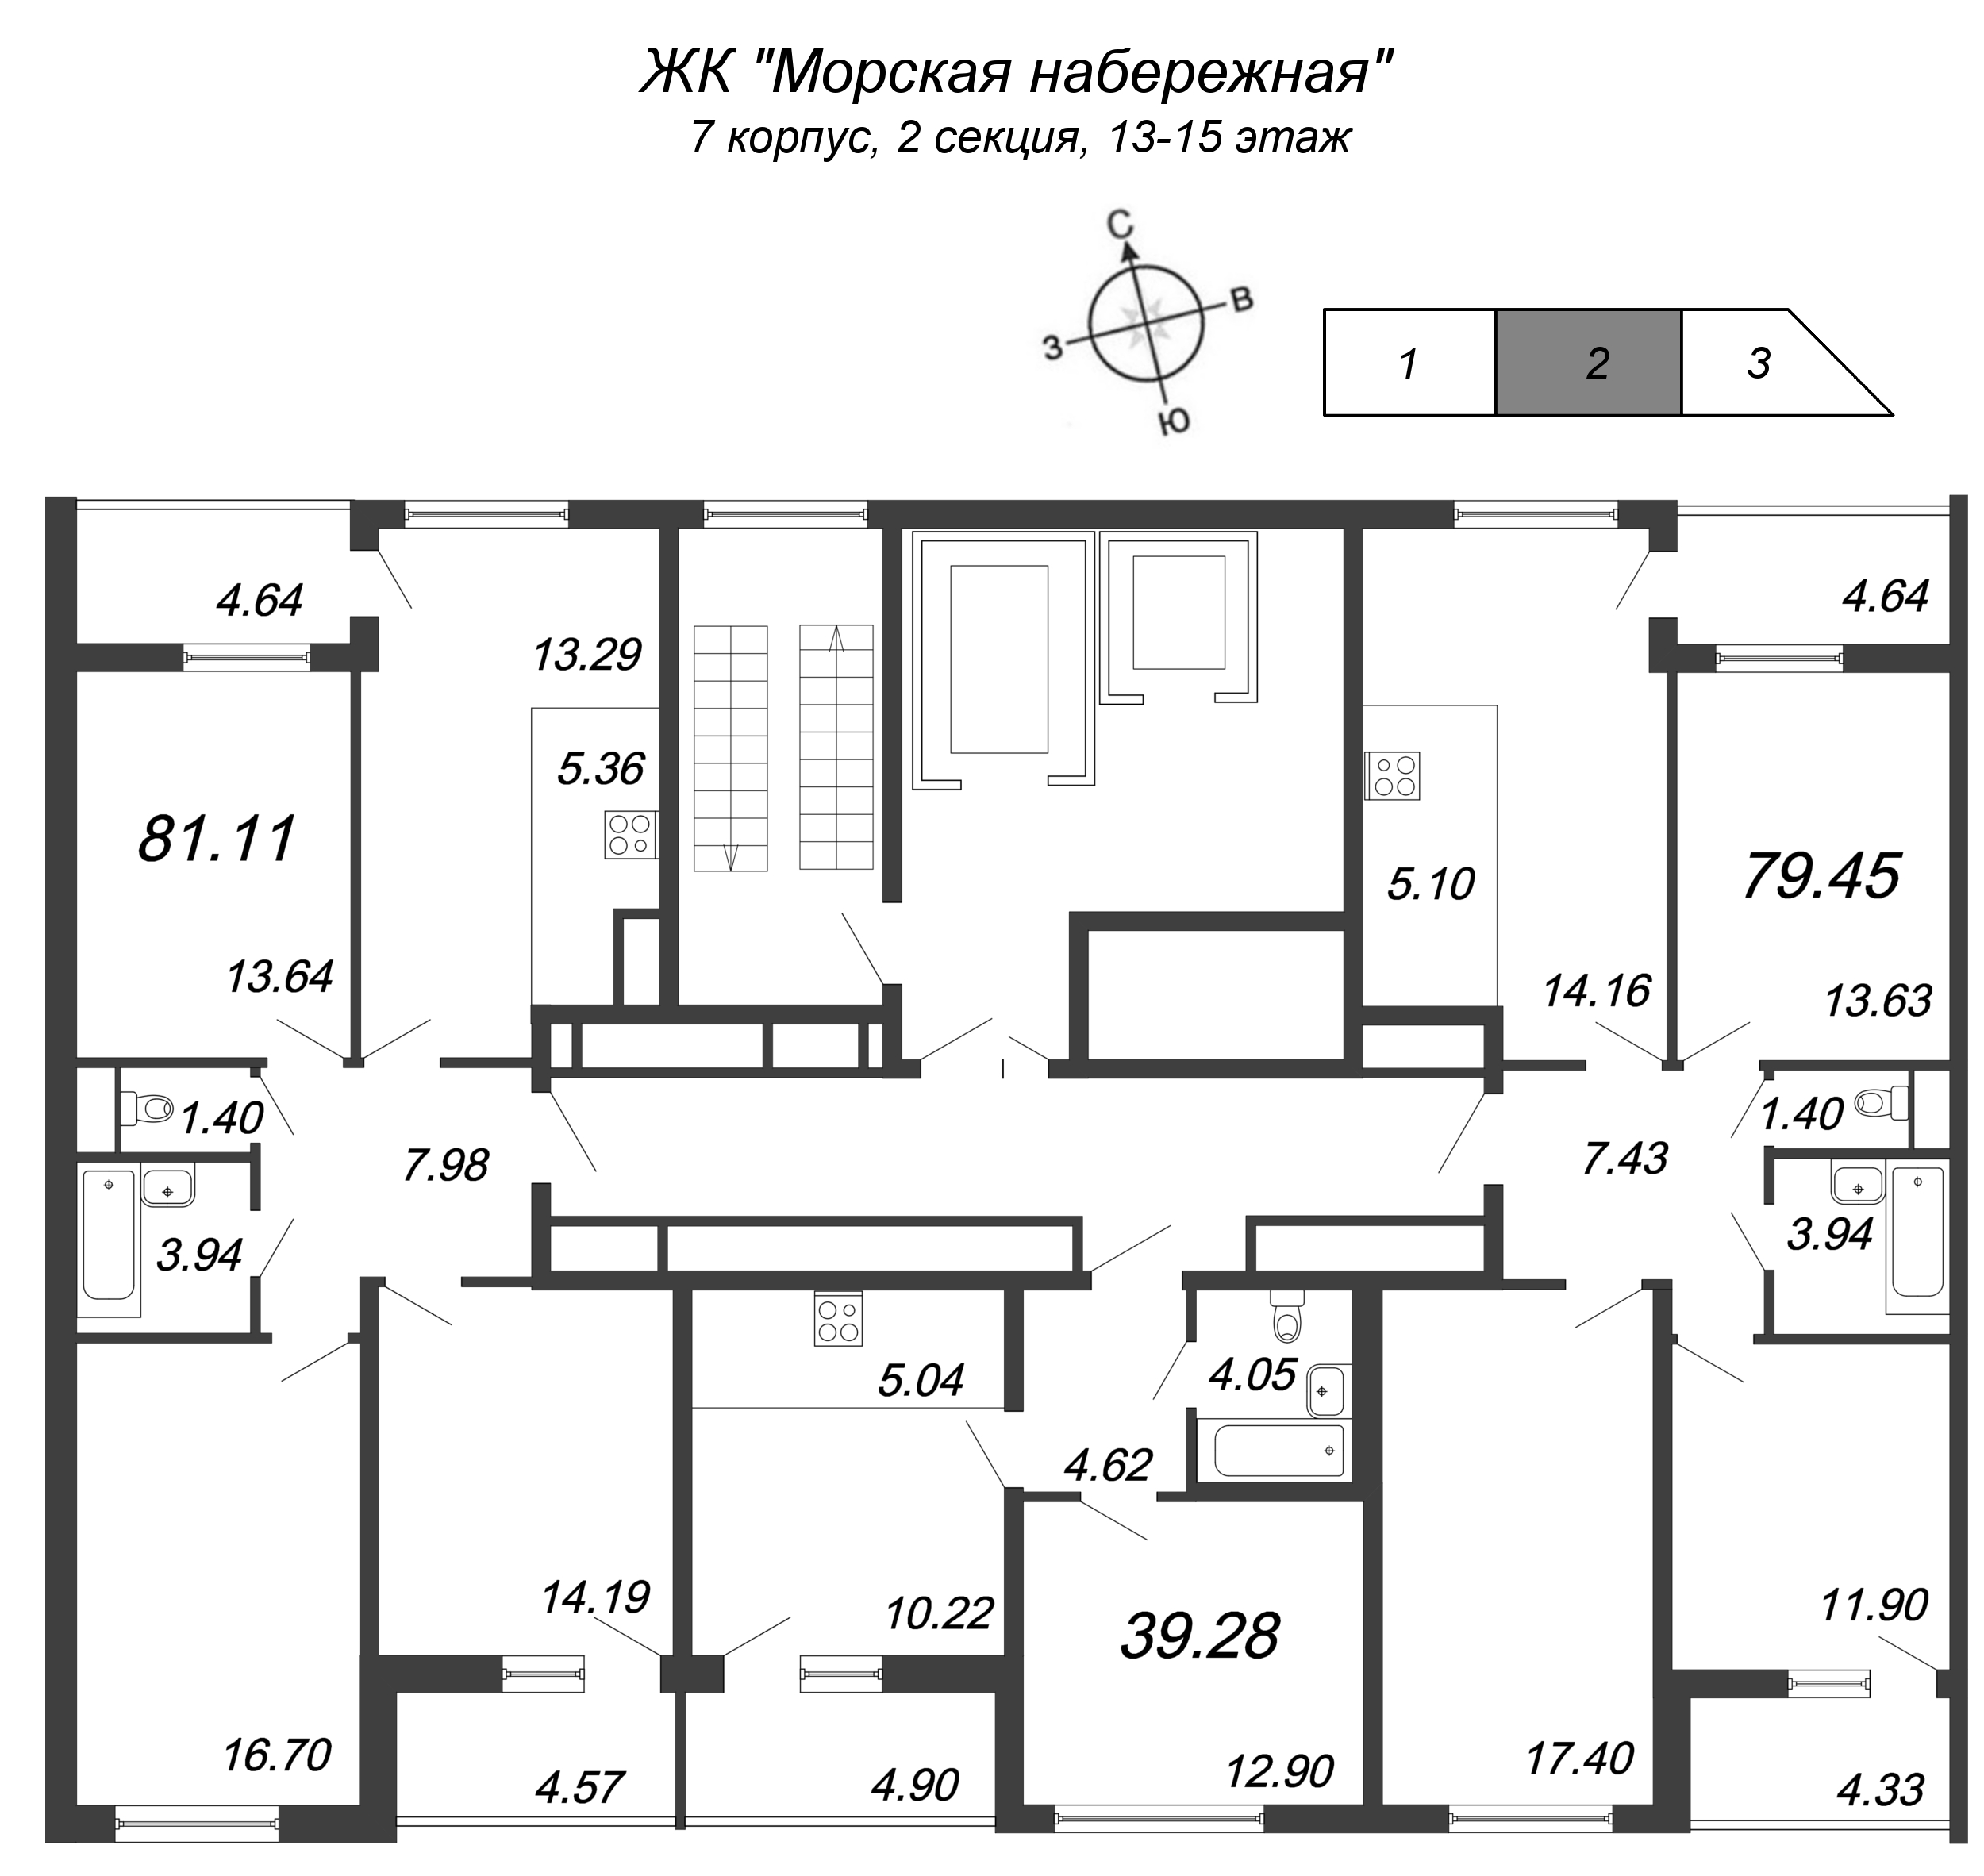 4-комнатная (Евро) квартира, 78.8 м² - планировка этажа